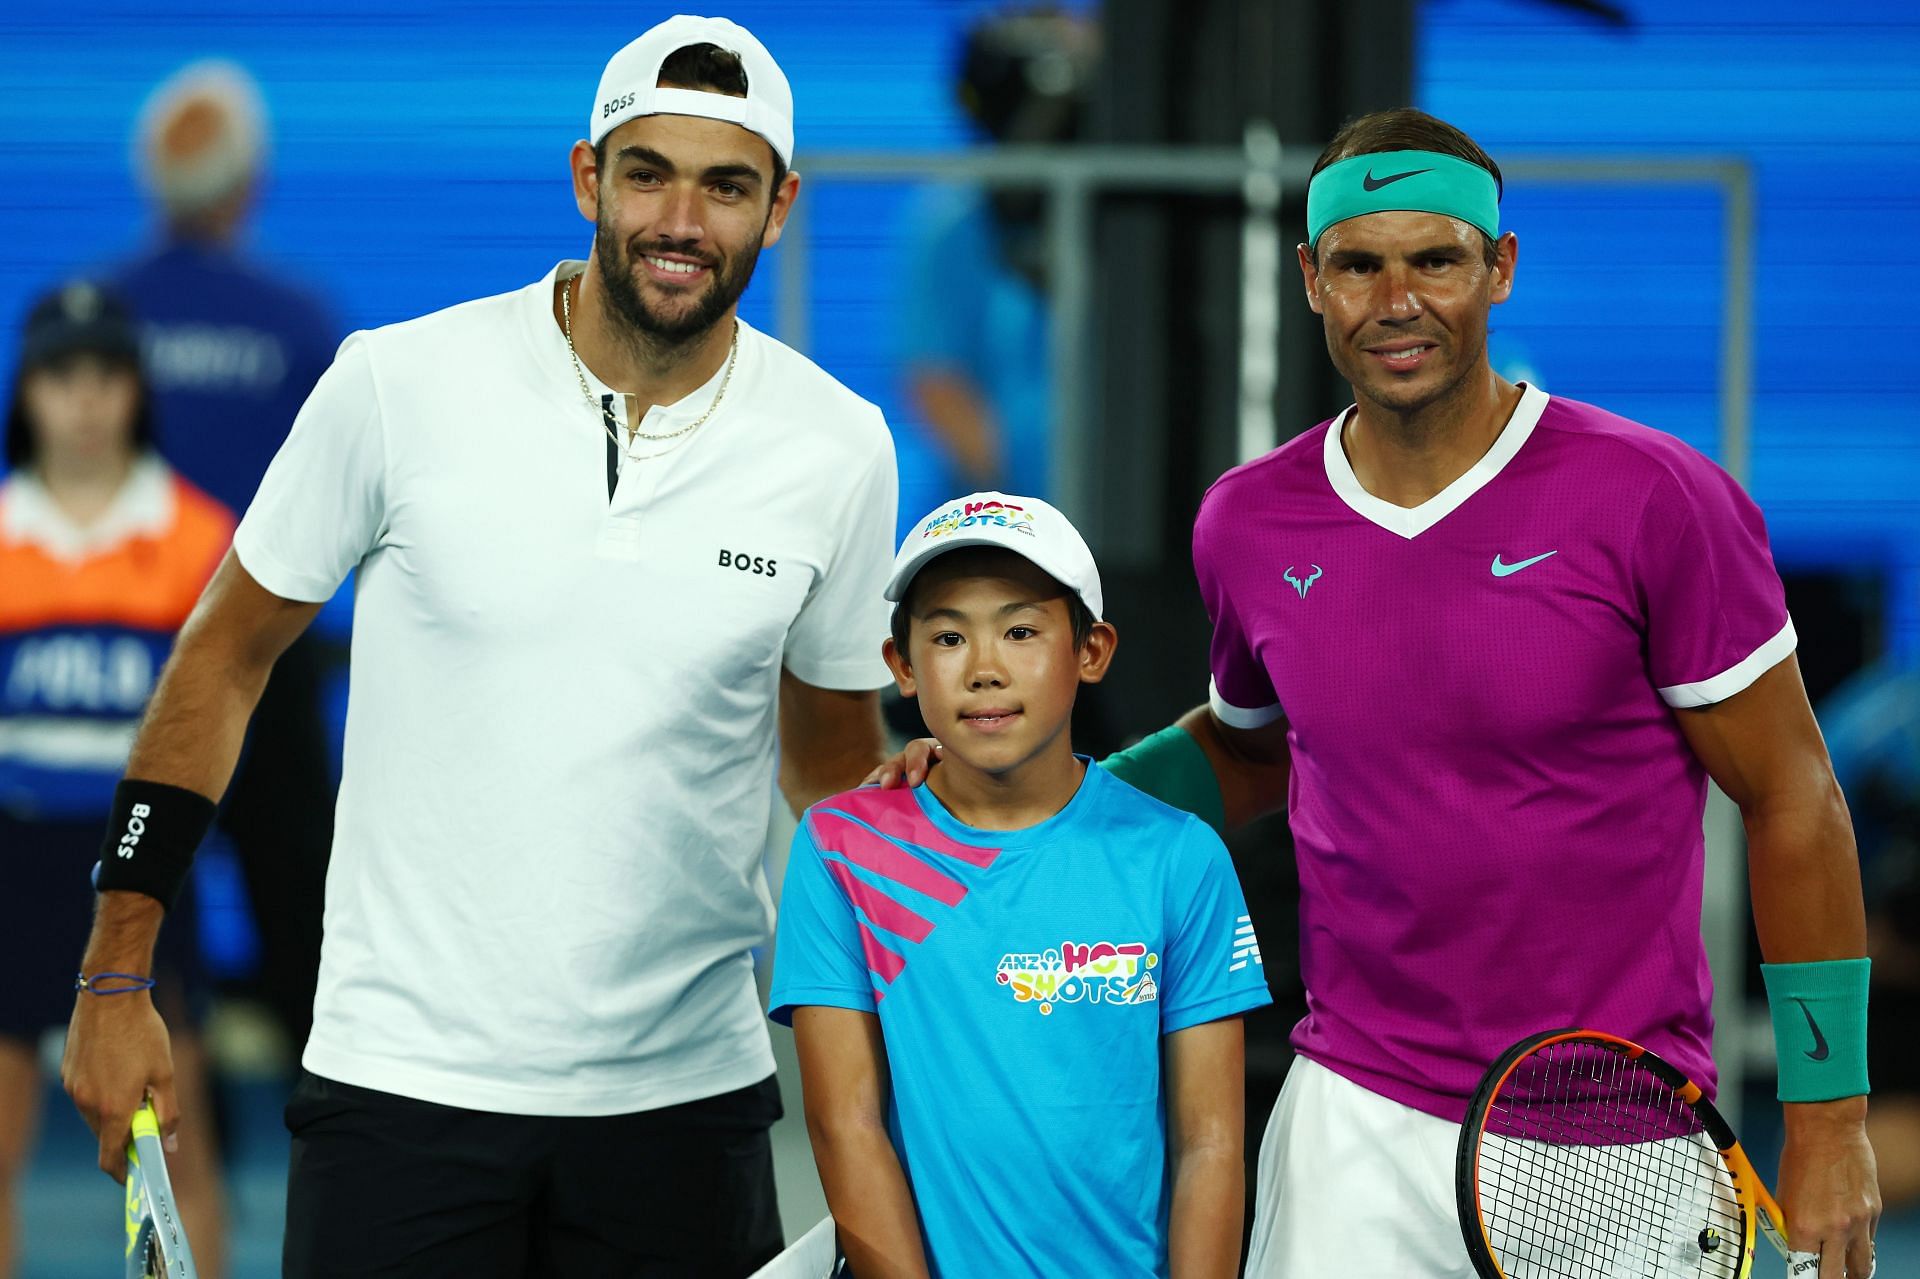 Rafael Nadal defeated Matteo Berrettini in the semifinal of the 2022 Australian Open